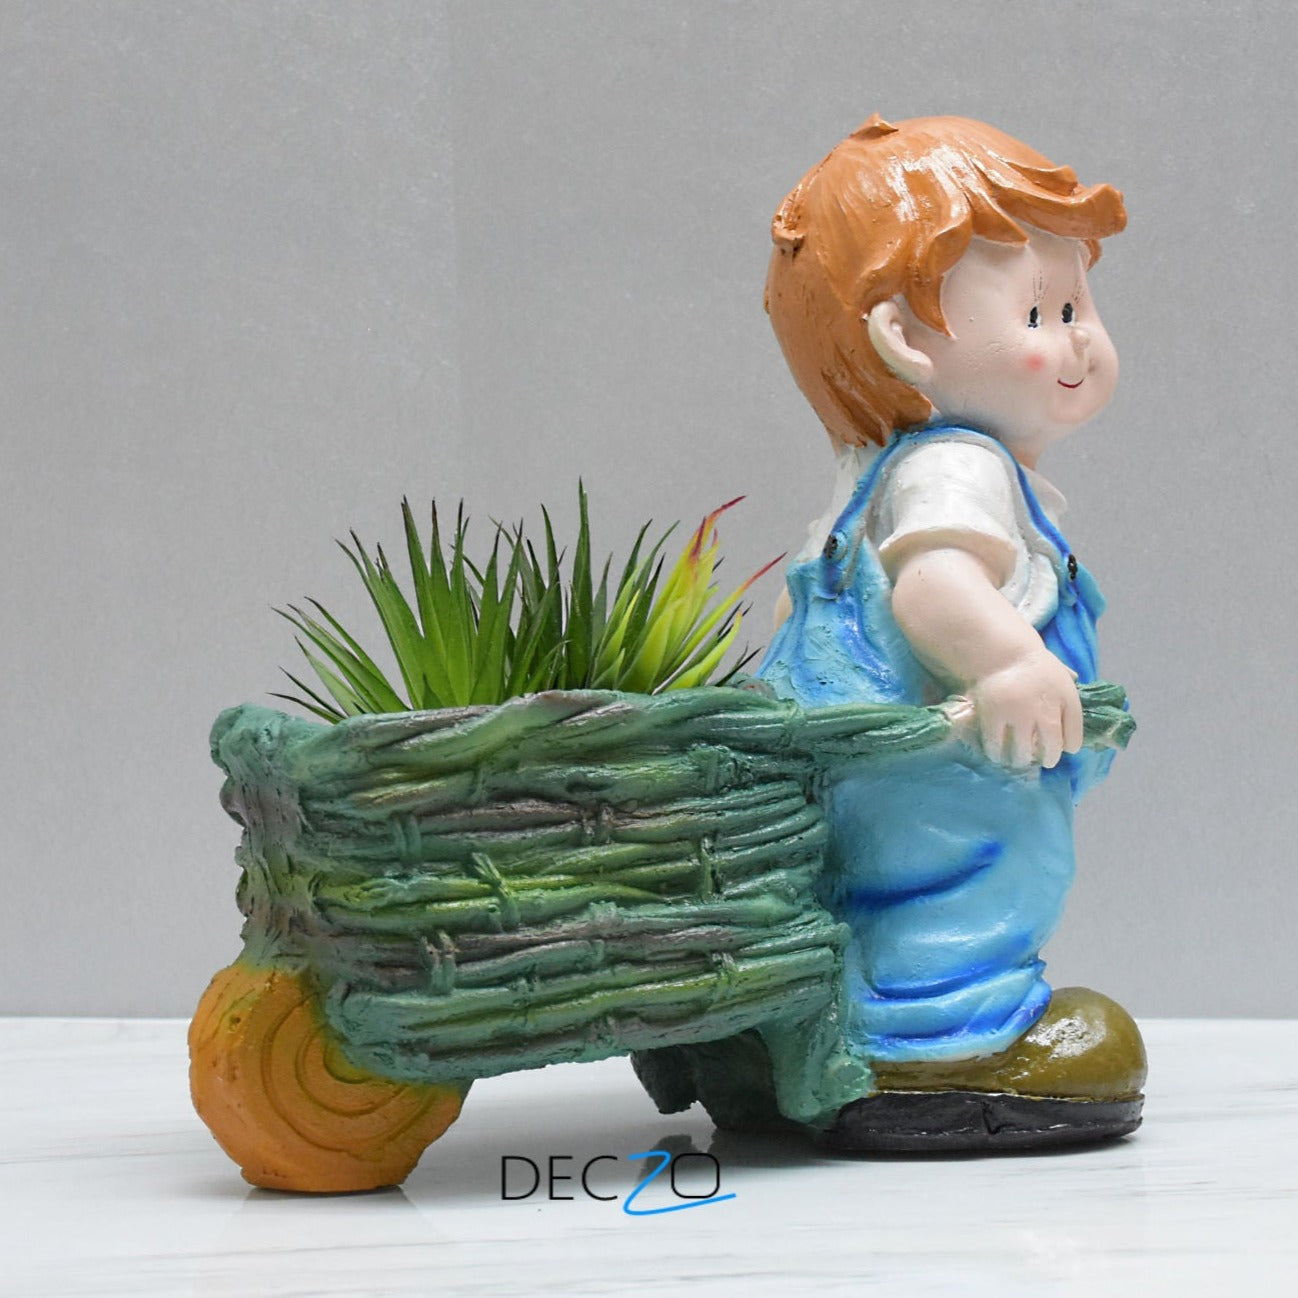 Boy Holding Cart Planter - Deczo